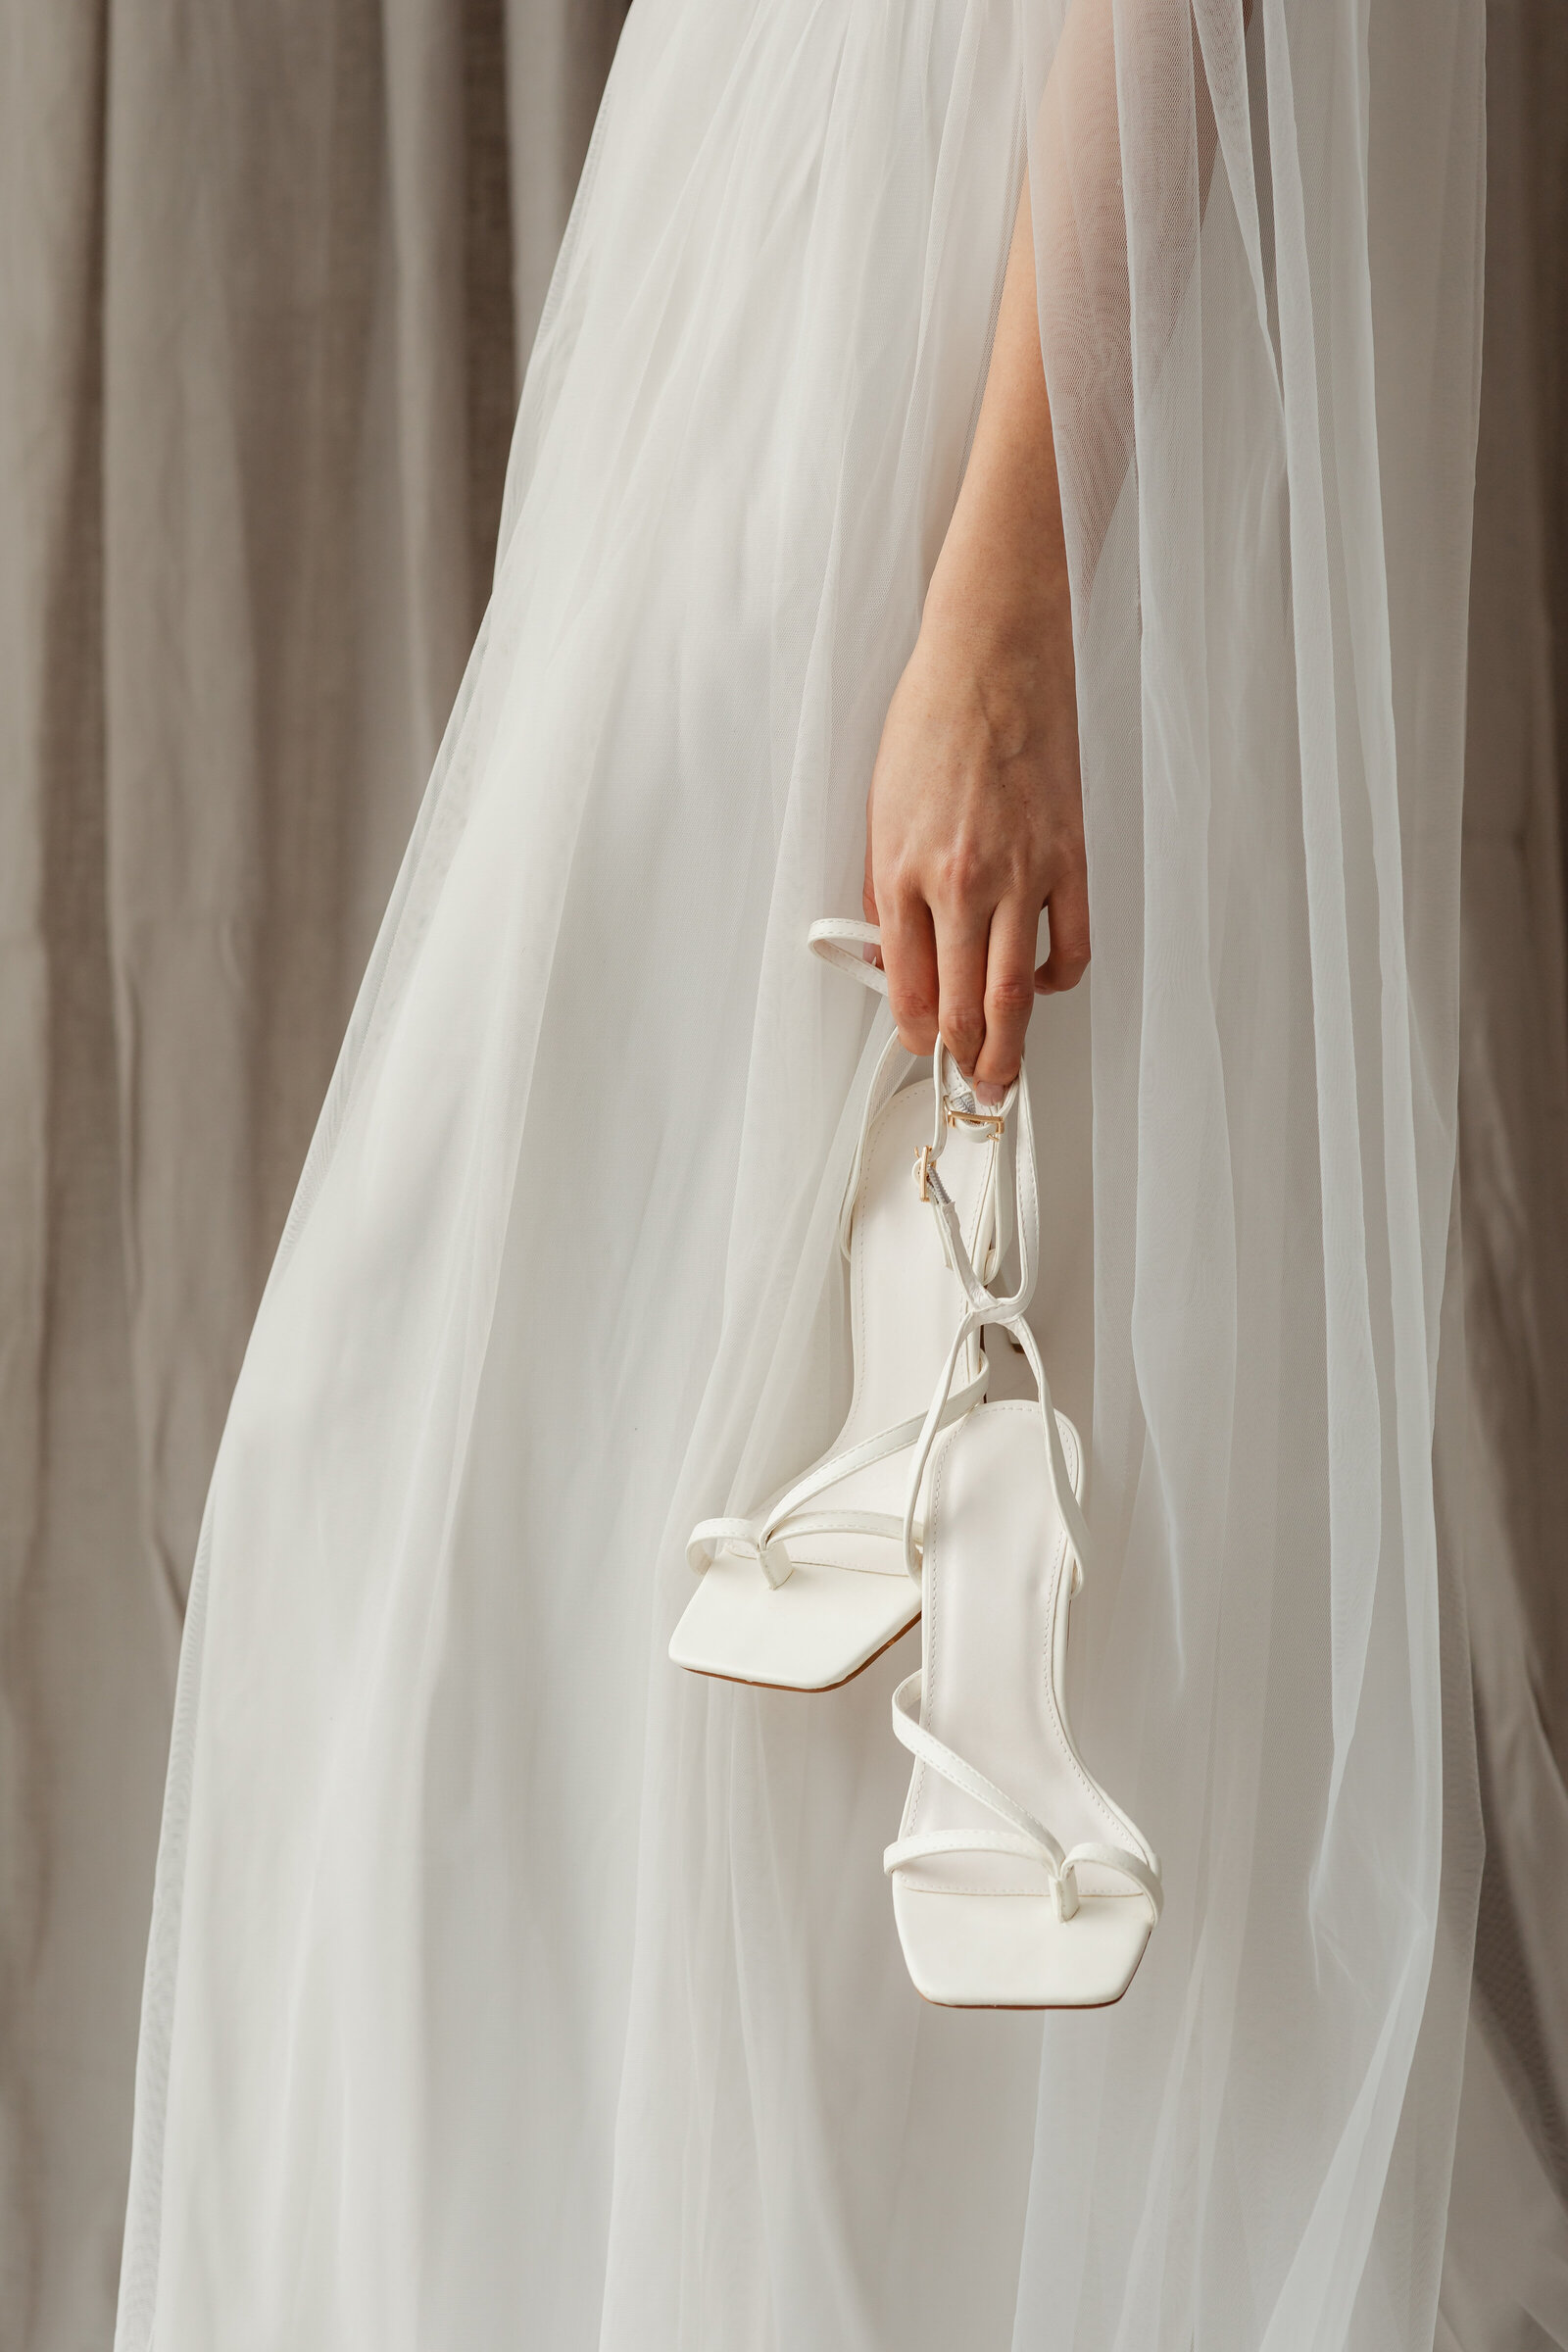 kaboompics_wedding-dress-white-high-heel-shoes-29755